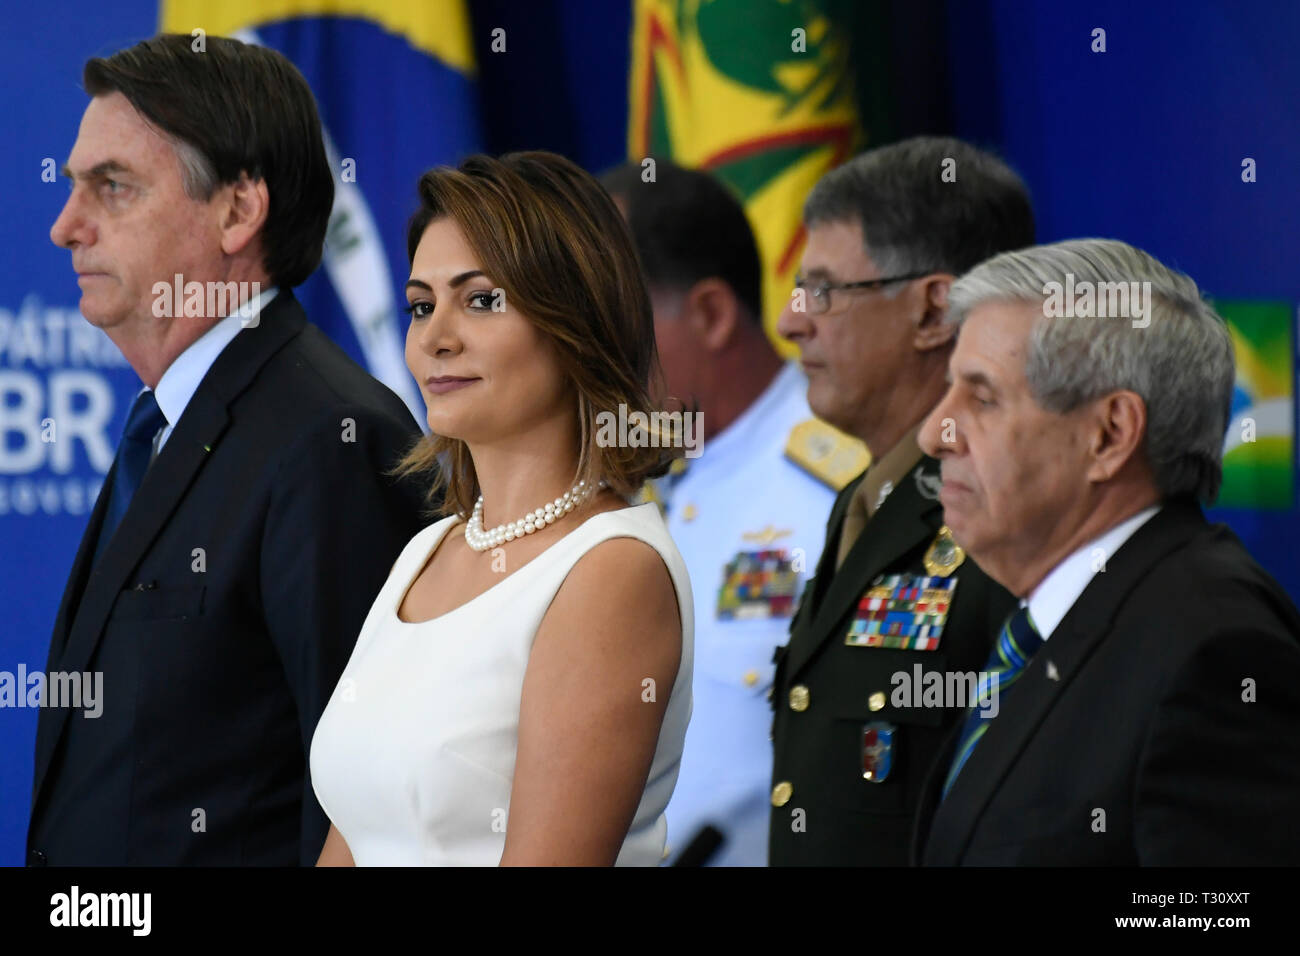 DF - Brasilia - 19/12/2019 - Christmas Cantata - Jair Bolsonaro, President  of the Republic, accompanied by Michelle Bolsonaro, First Lady, and Laura  Bolsonaro, Daughter of the President, this Thursday, December 19